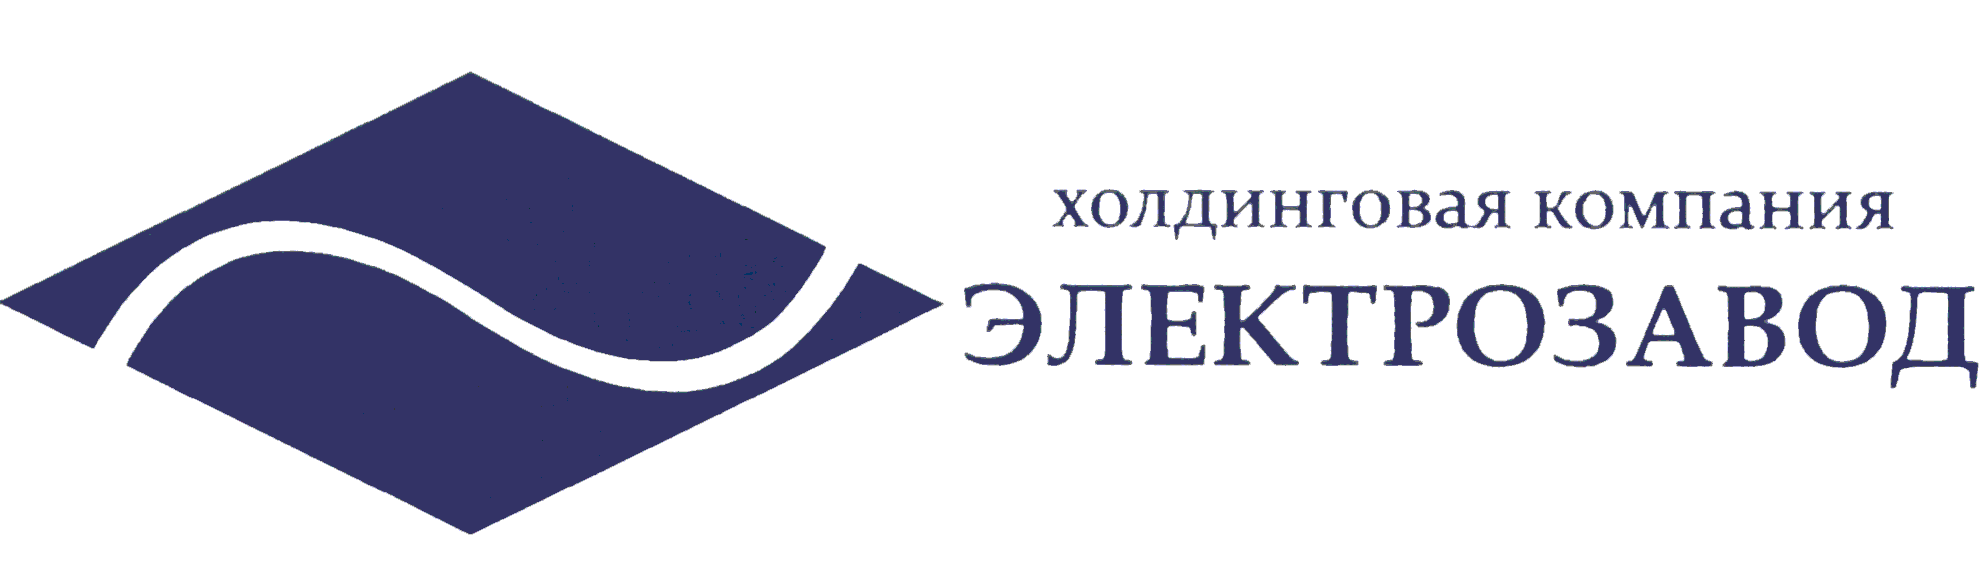 Логотип - Офис ОАО Холдинговая компания «Электрозавод»